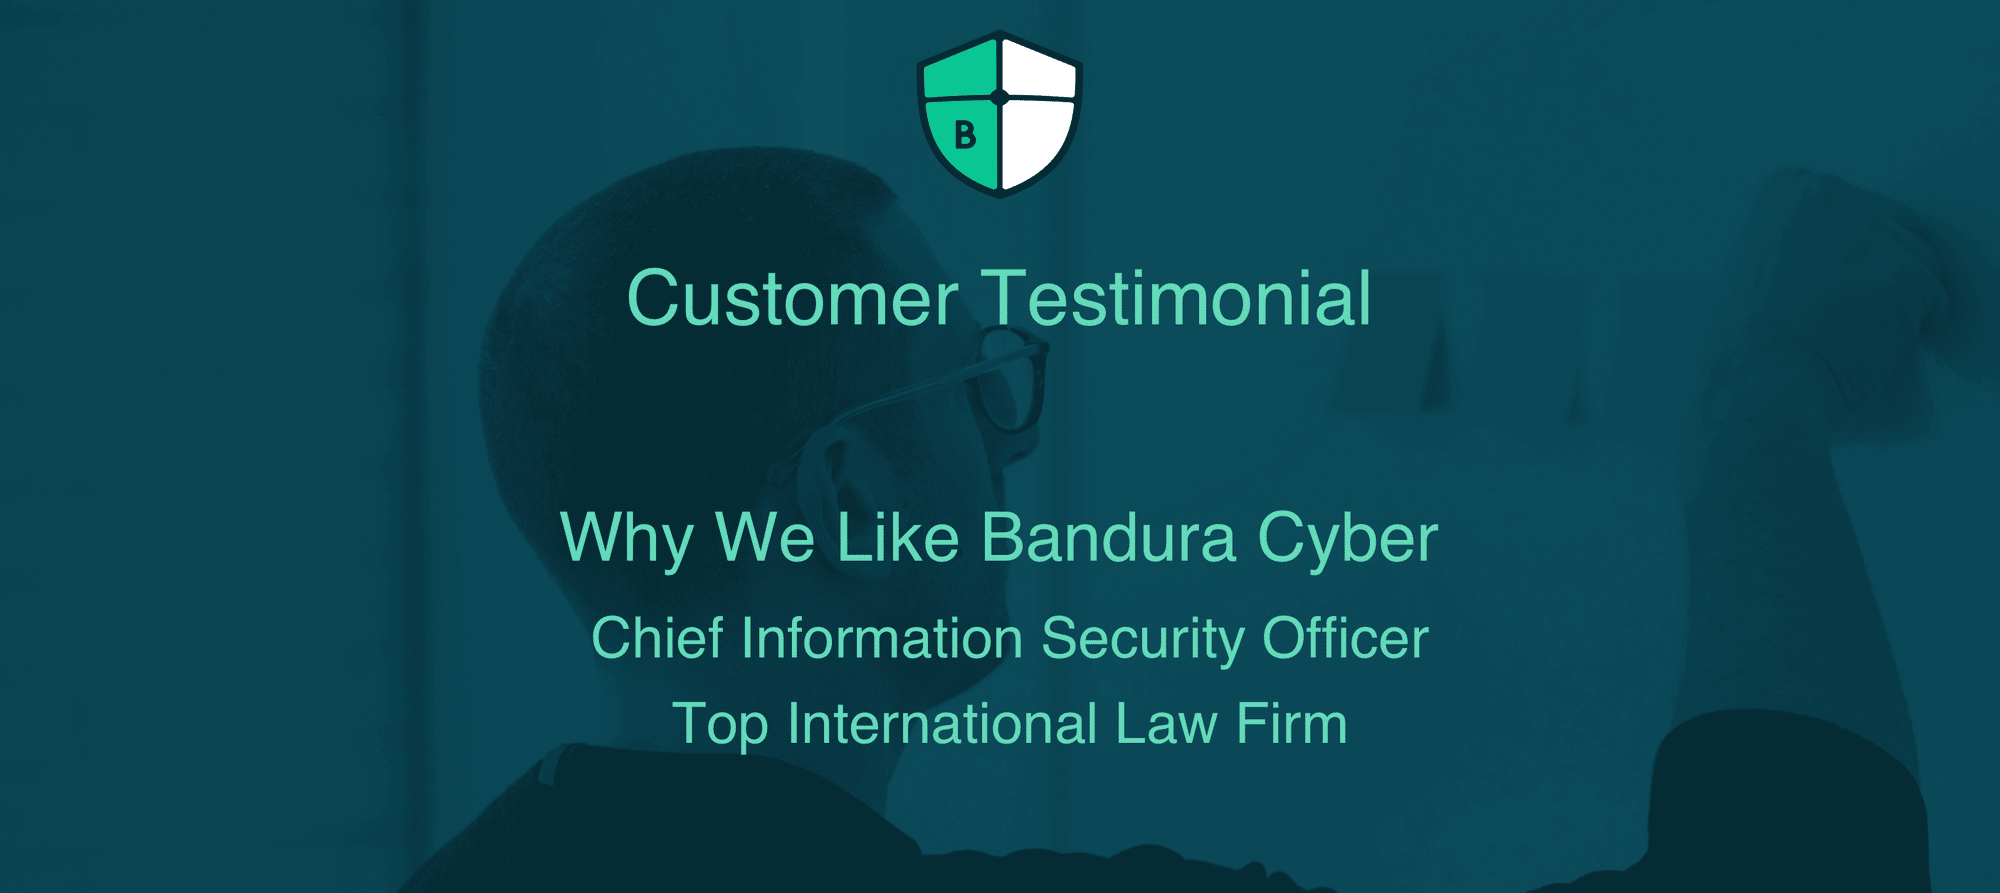 Bandura Cyber Customer Testimonial Promotional Image